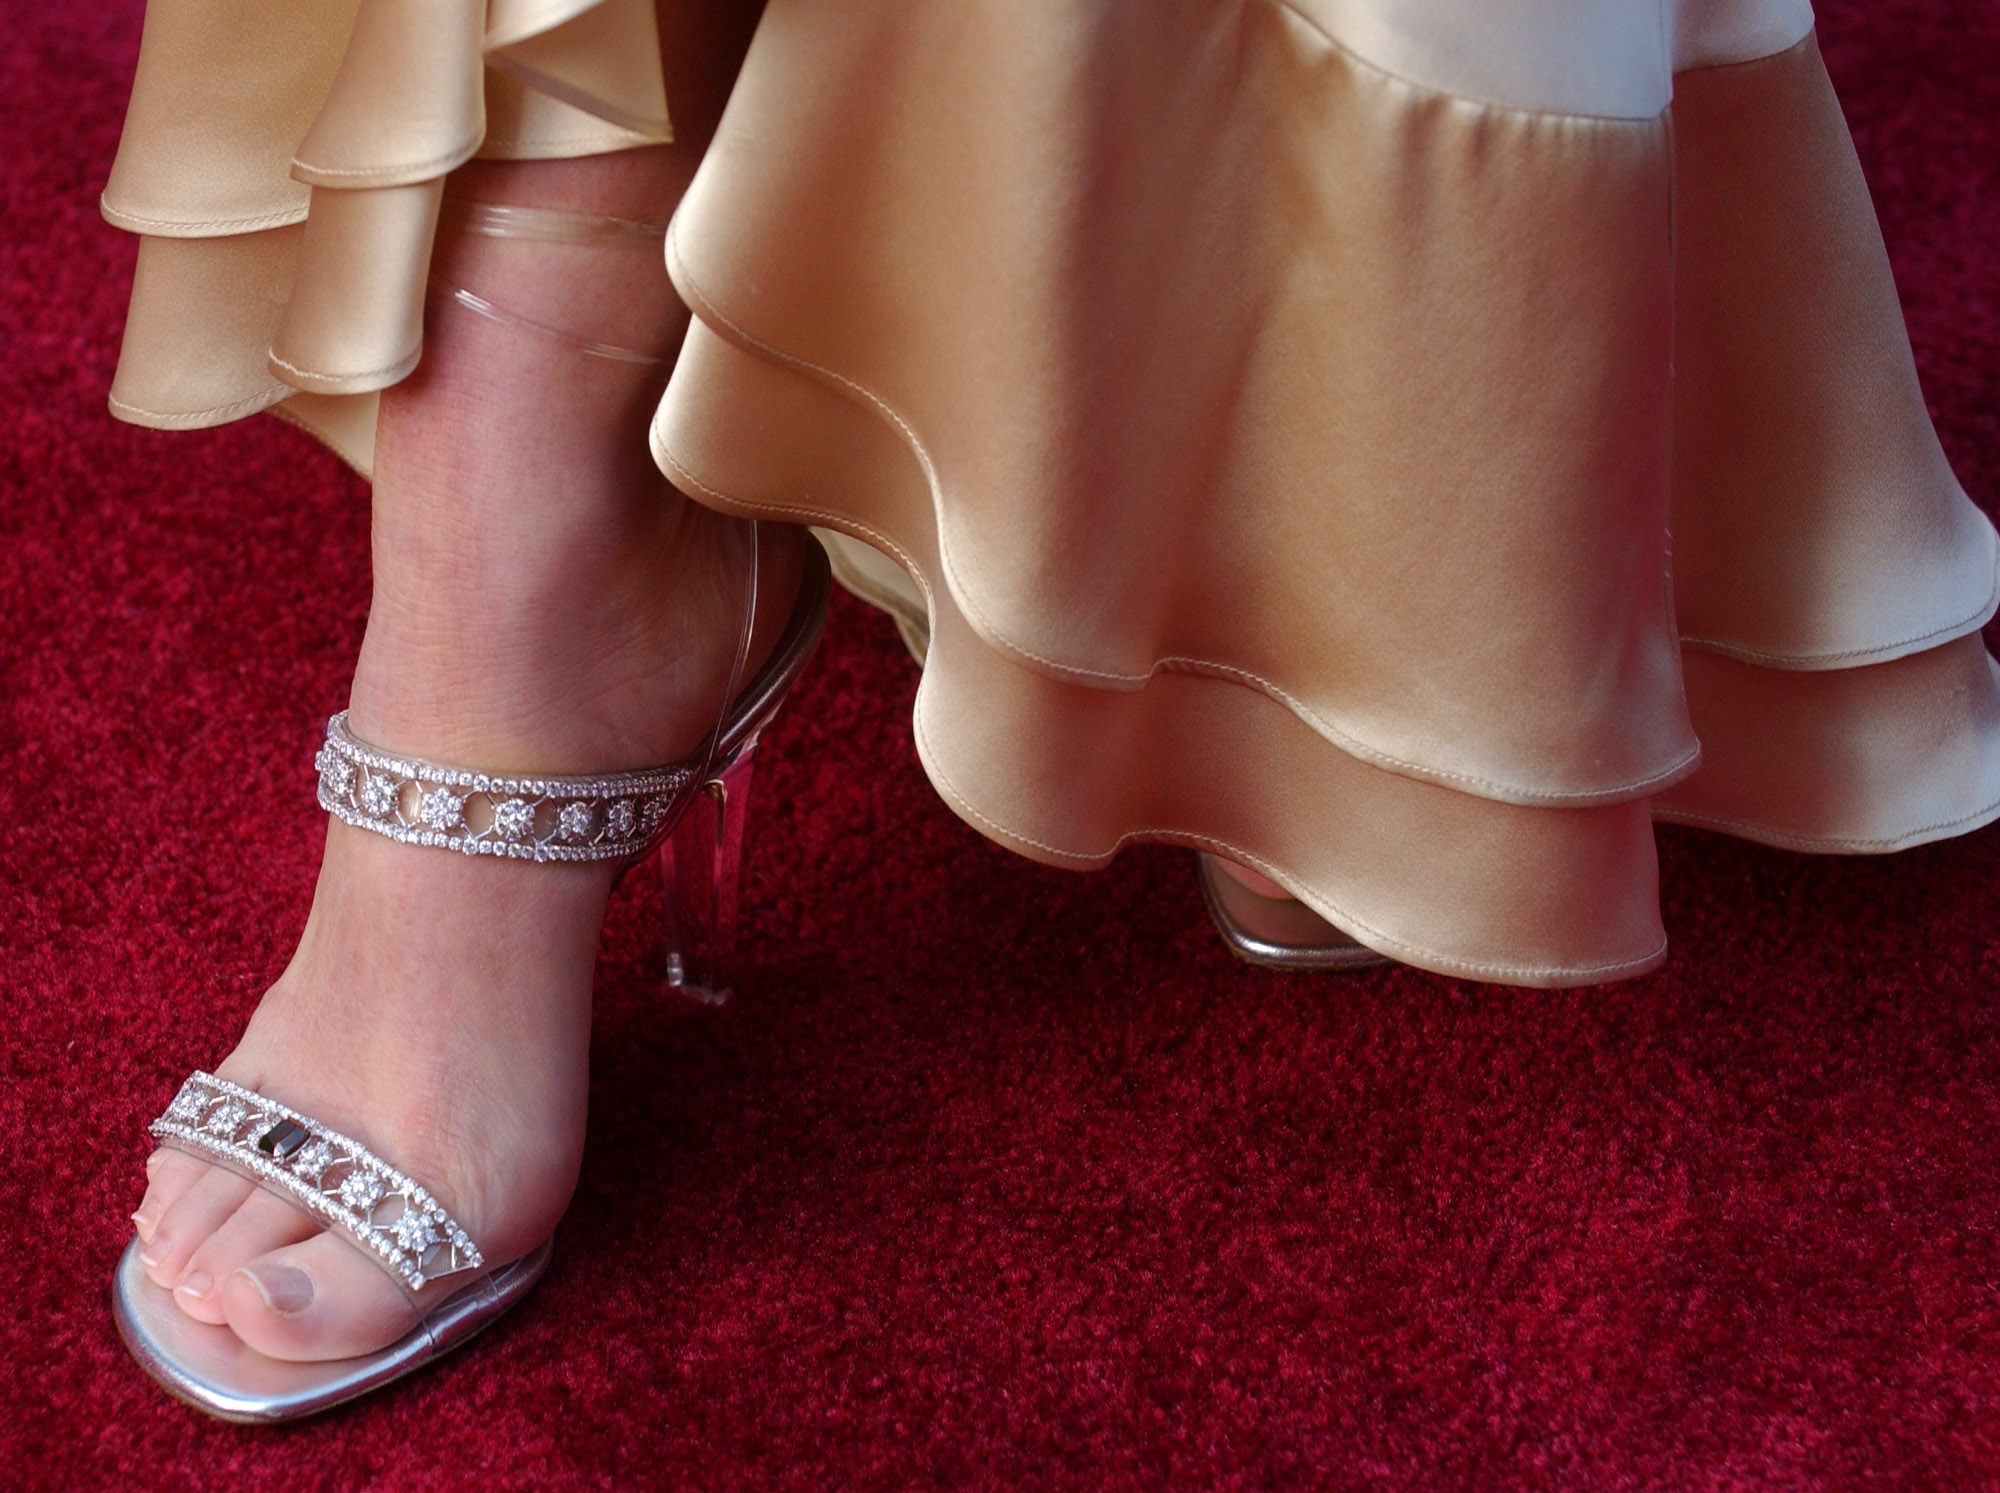 Alison Krauss's Feet